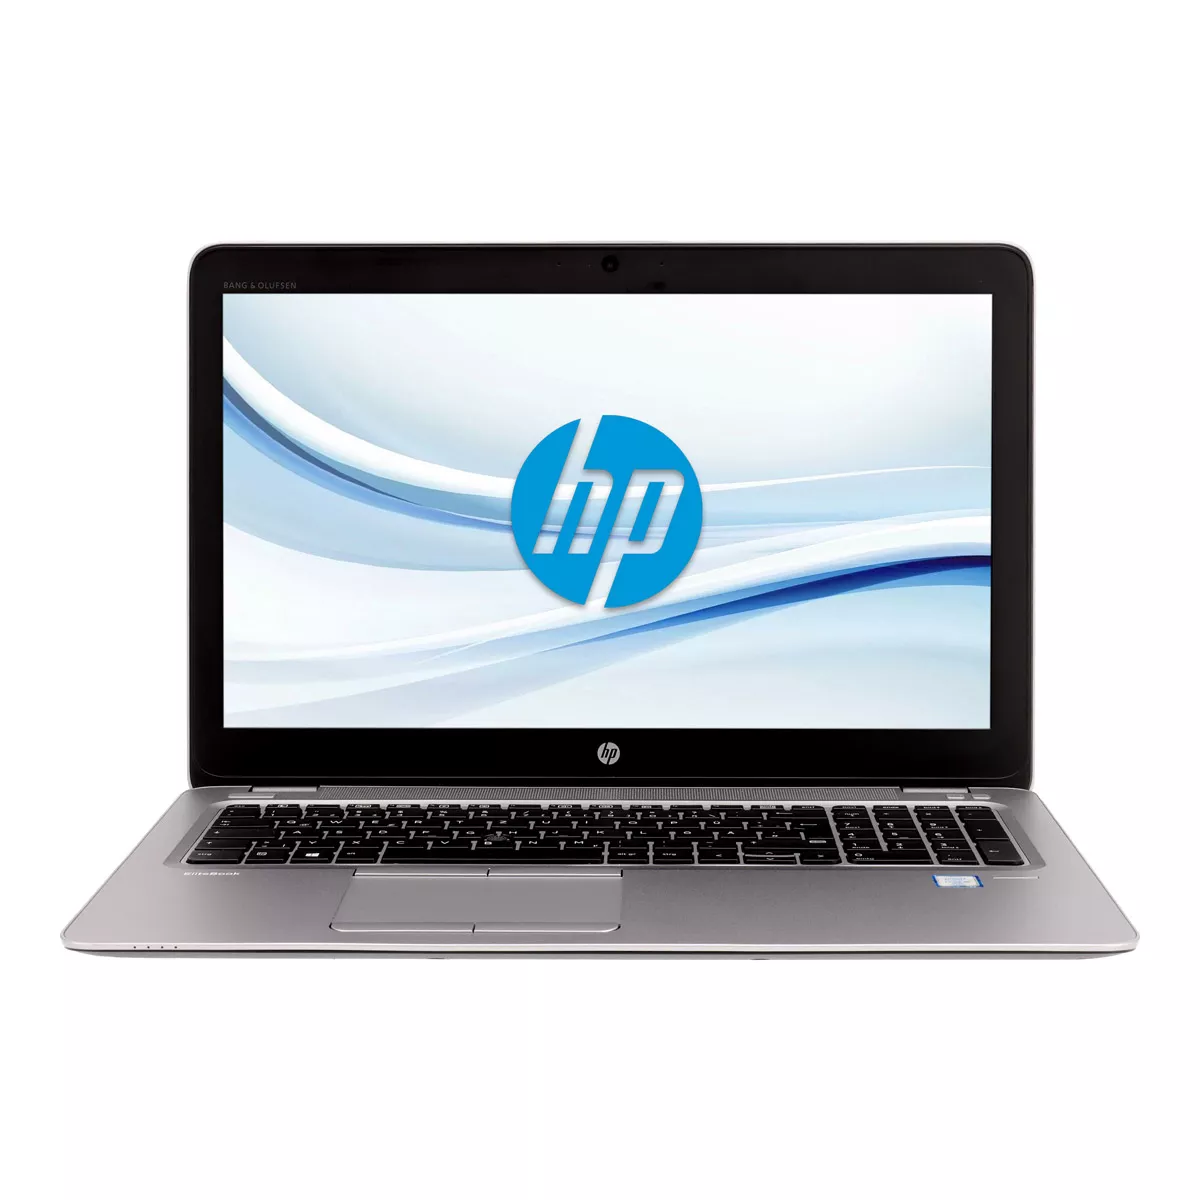 HP EliteBook 850 G4 Core i5 7300U Full-HD 240 GB M.2 SSD Webcam B